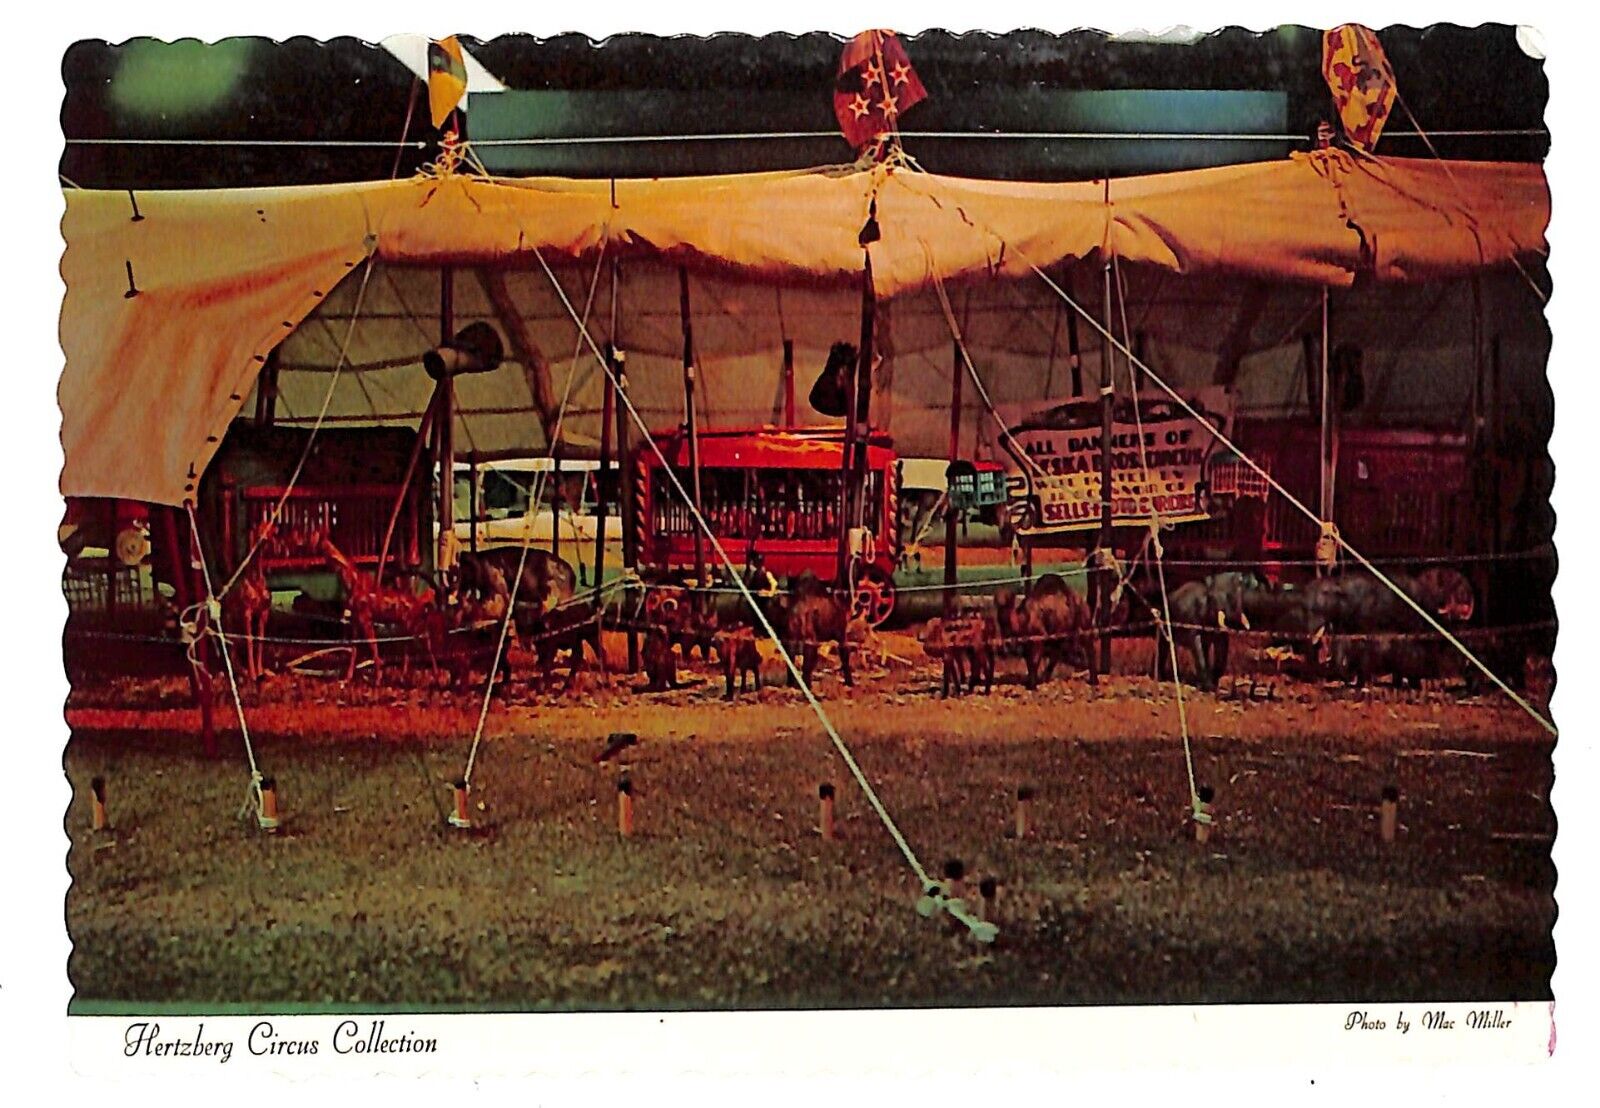 Hertzberg Circus Collection \